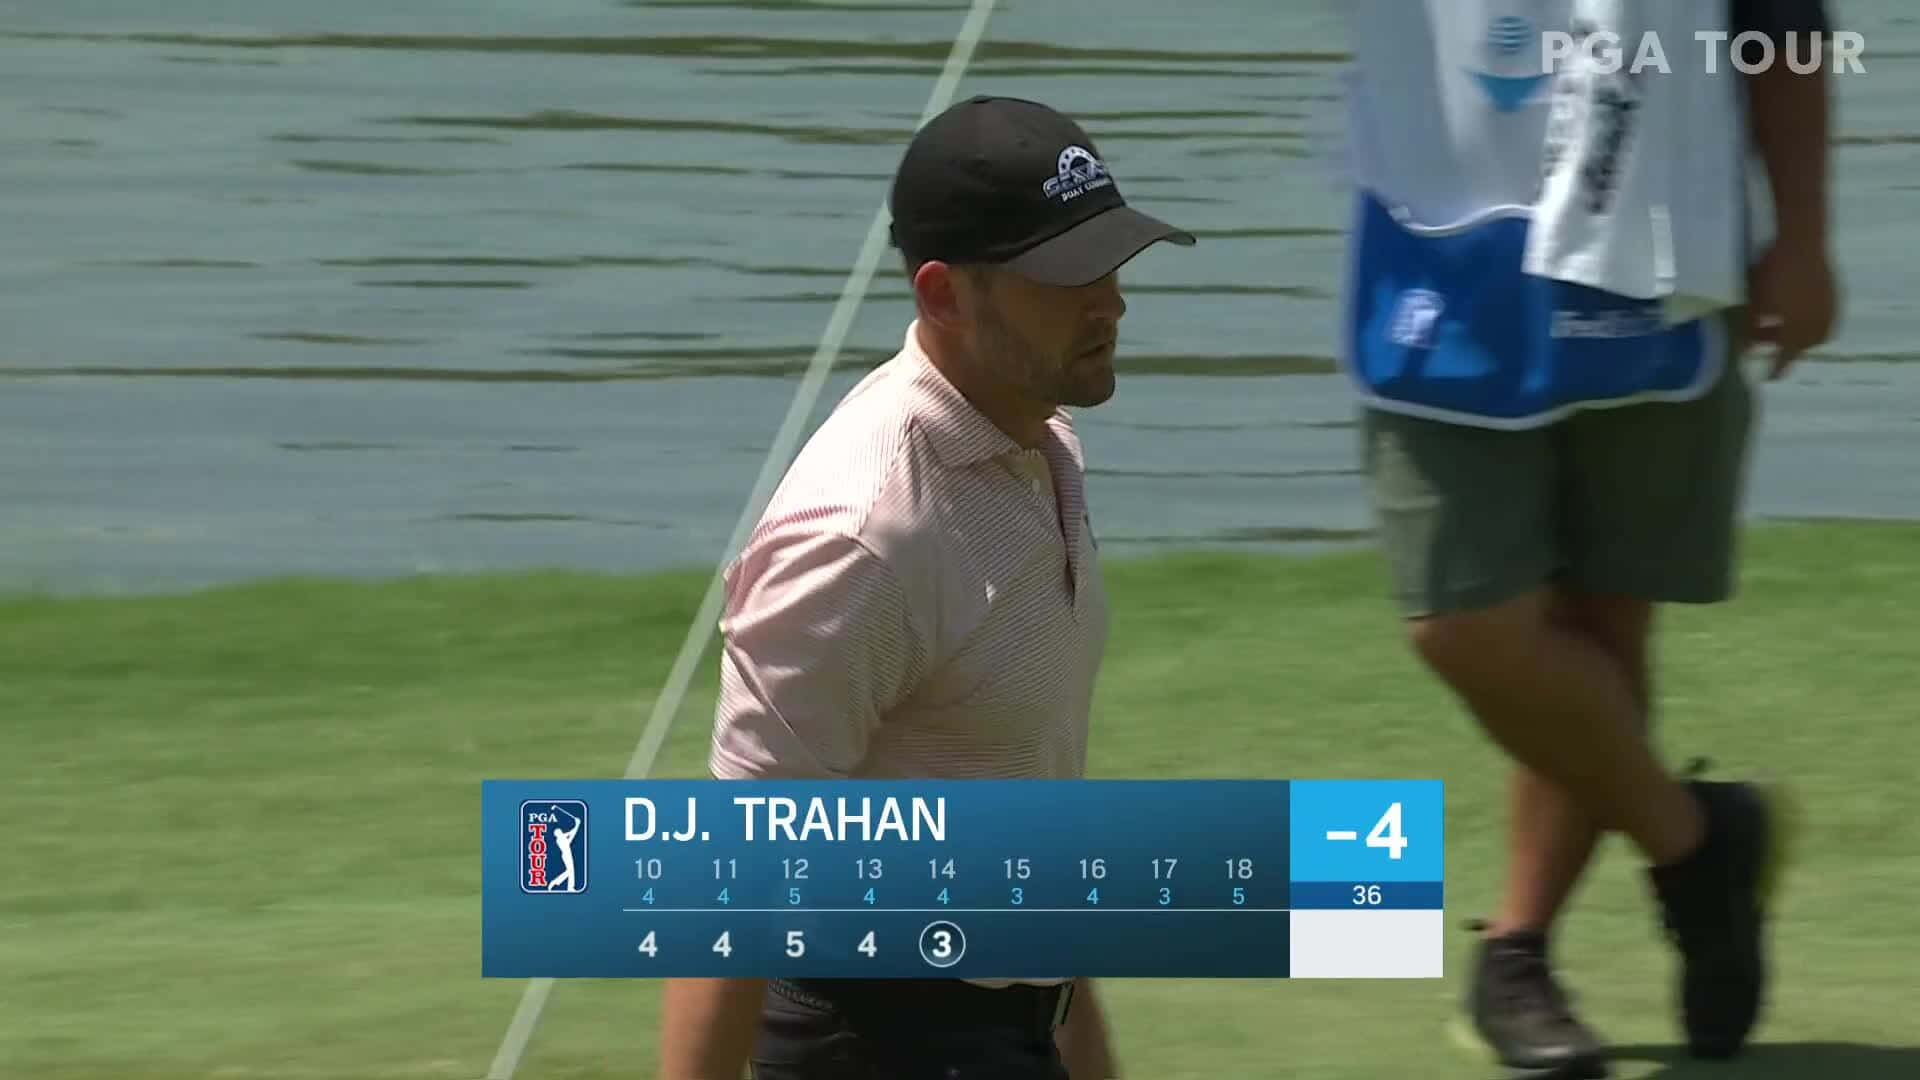 DJ Trahan Golf Score Wallpaper